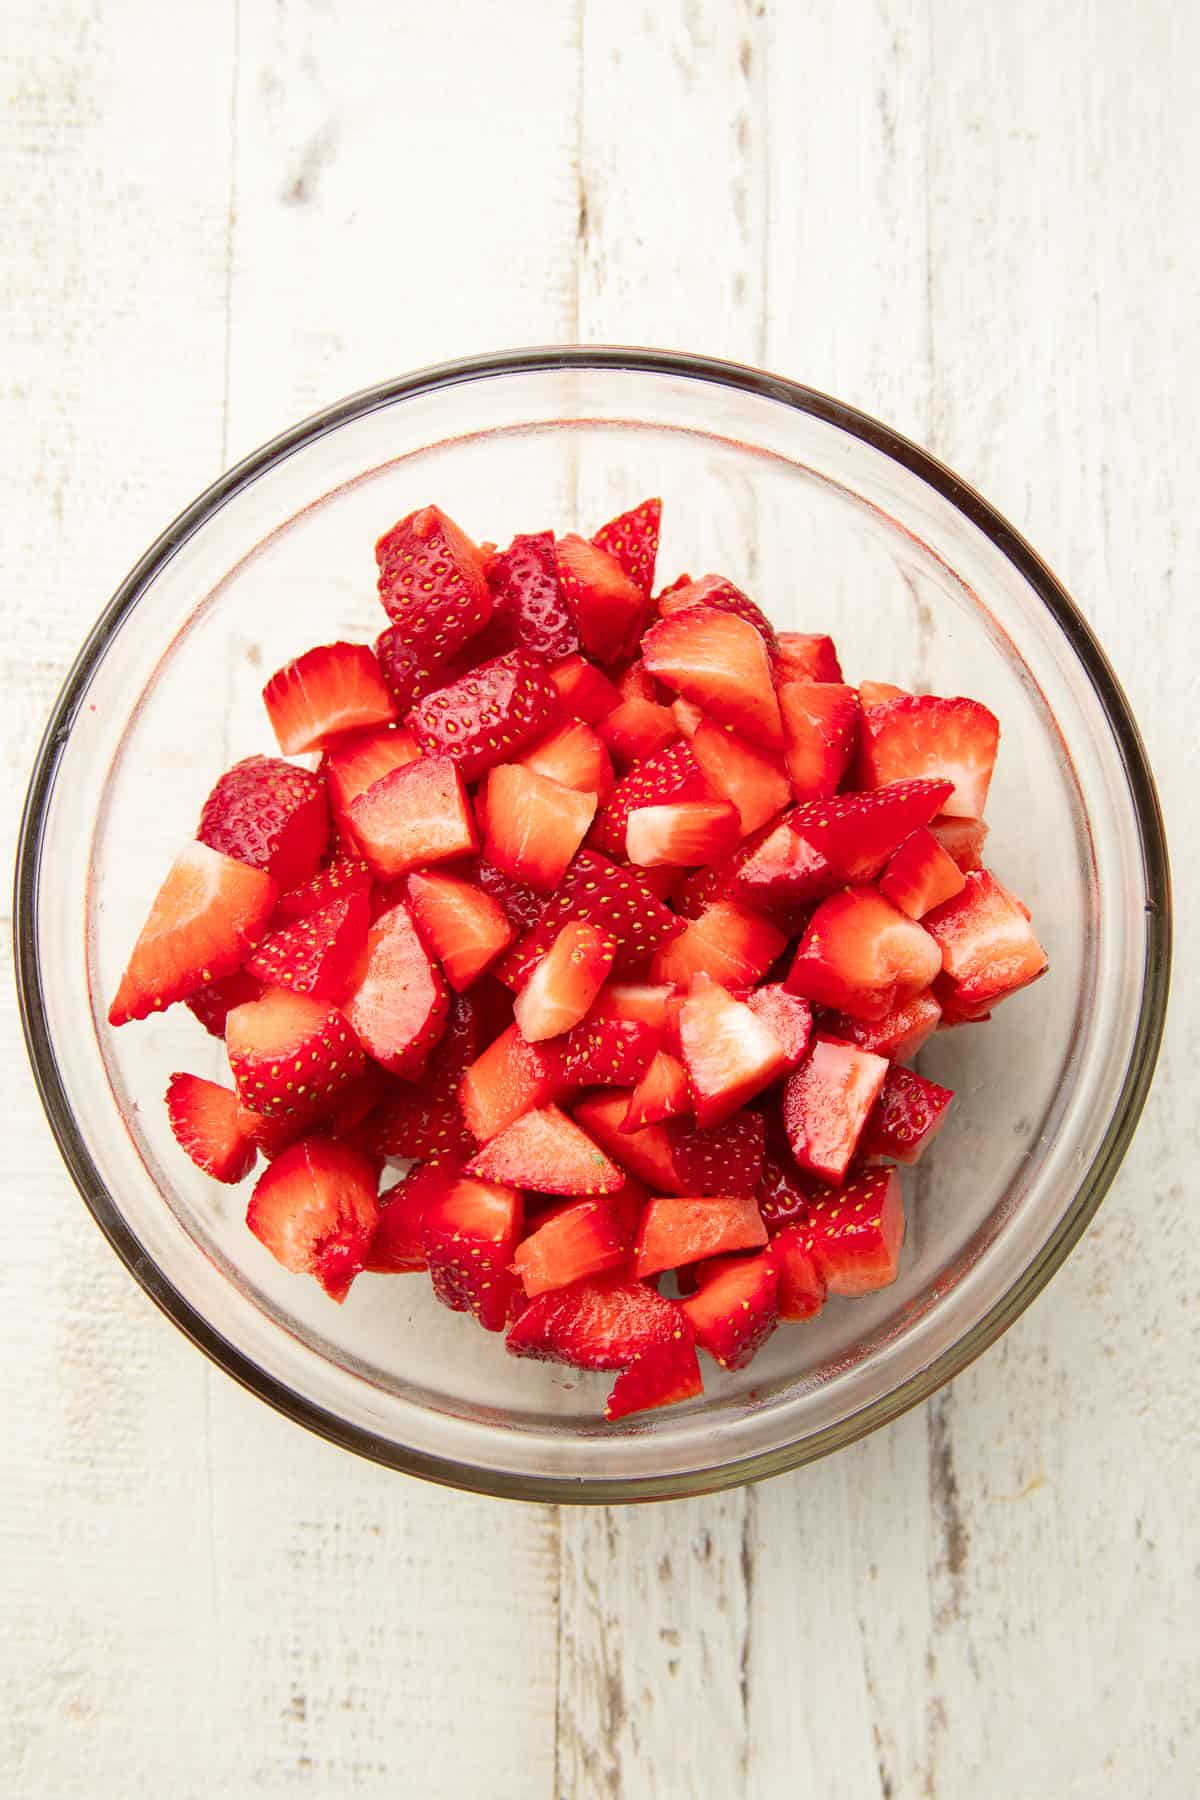 Chopped fresh strawberries in a glass bowl.